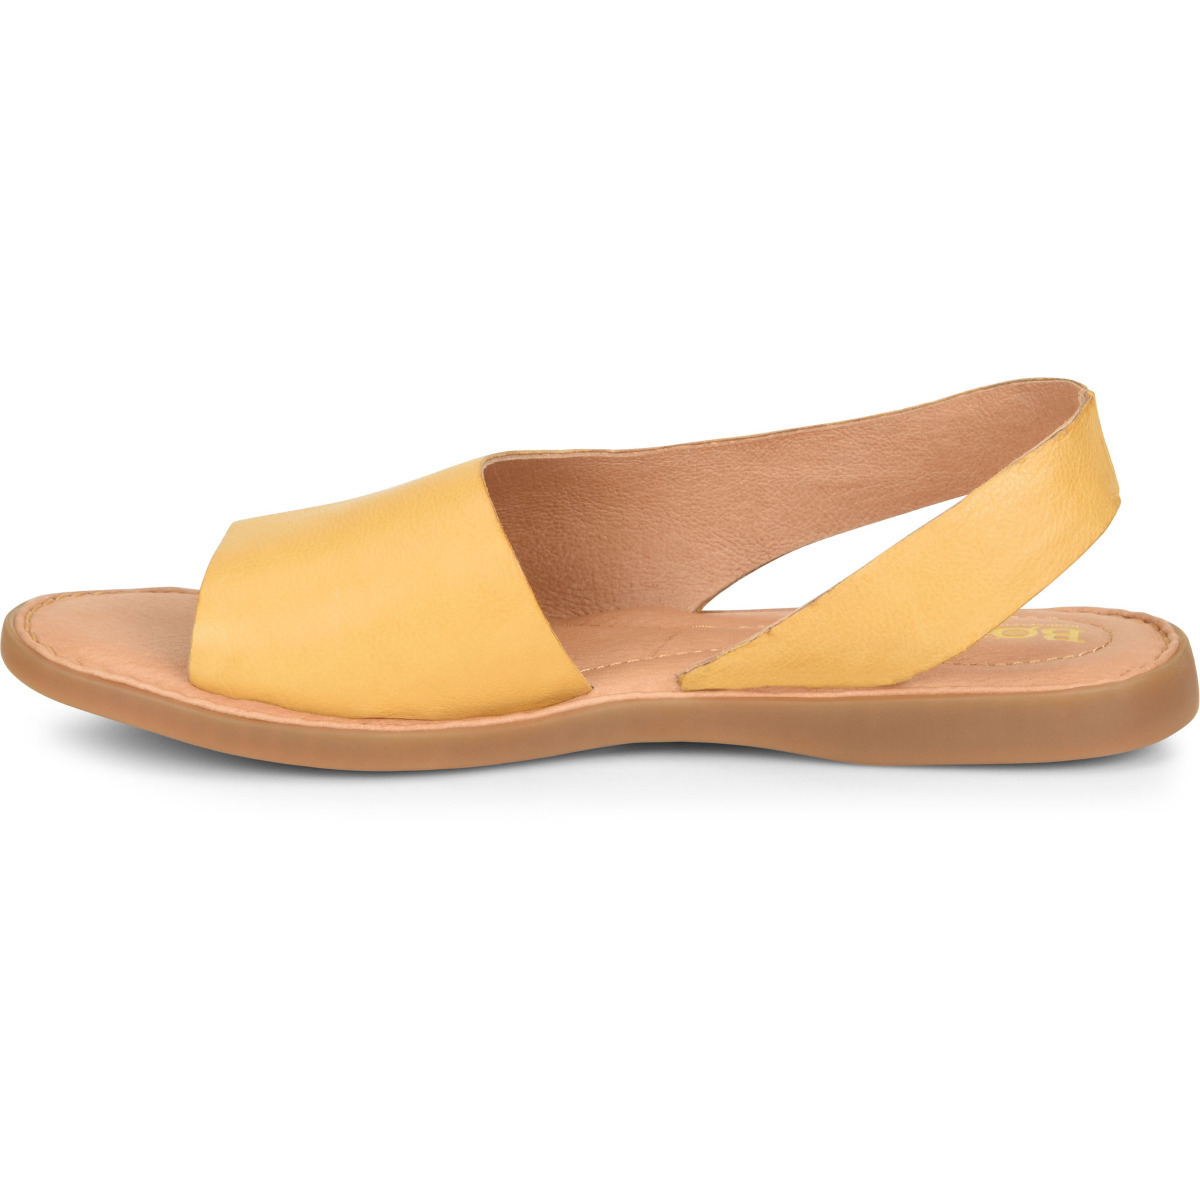 Born Women's Inlet Sandal Orca (Yellow) - BR0002292 YELLOW - YELLOW, 10